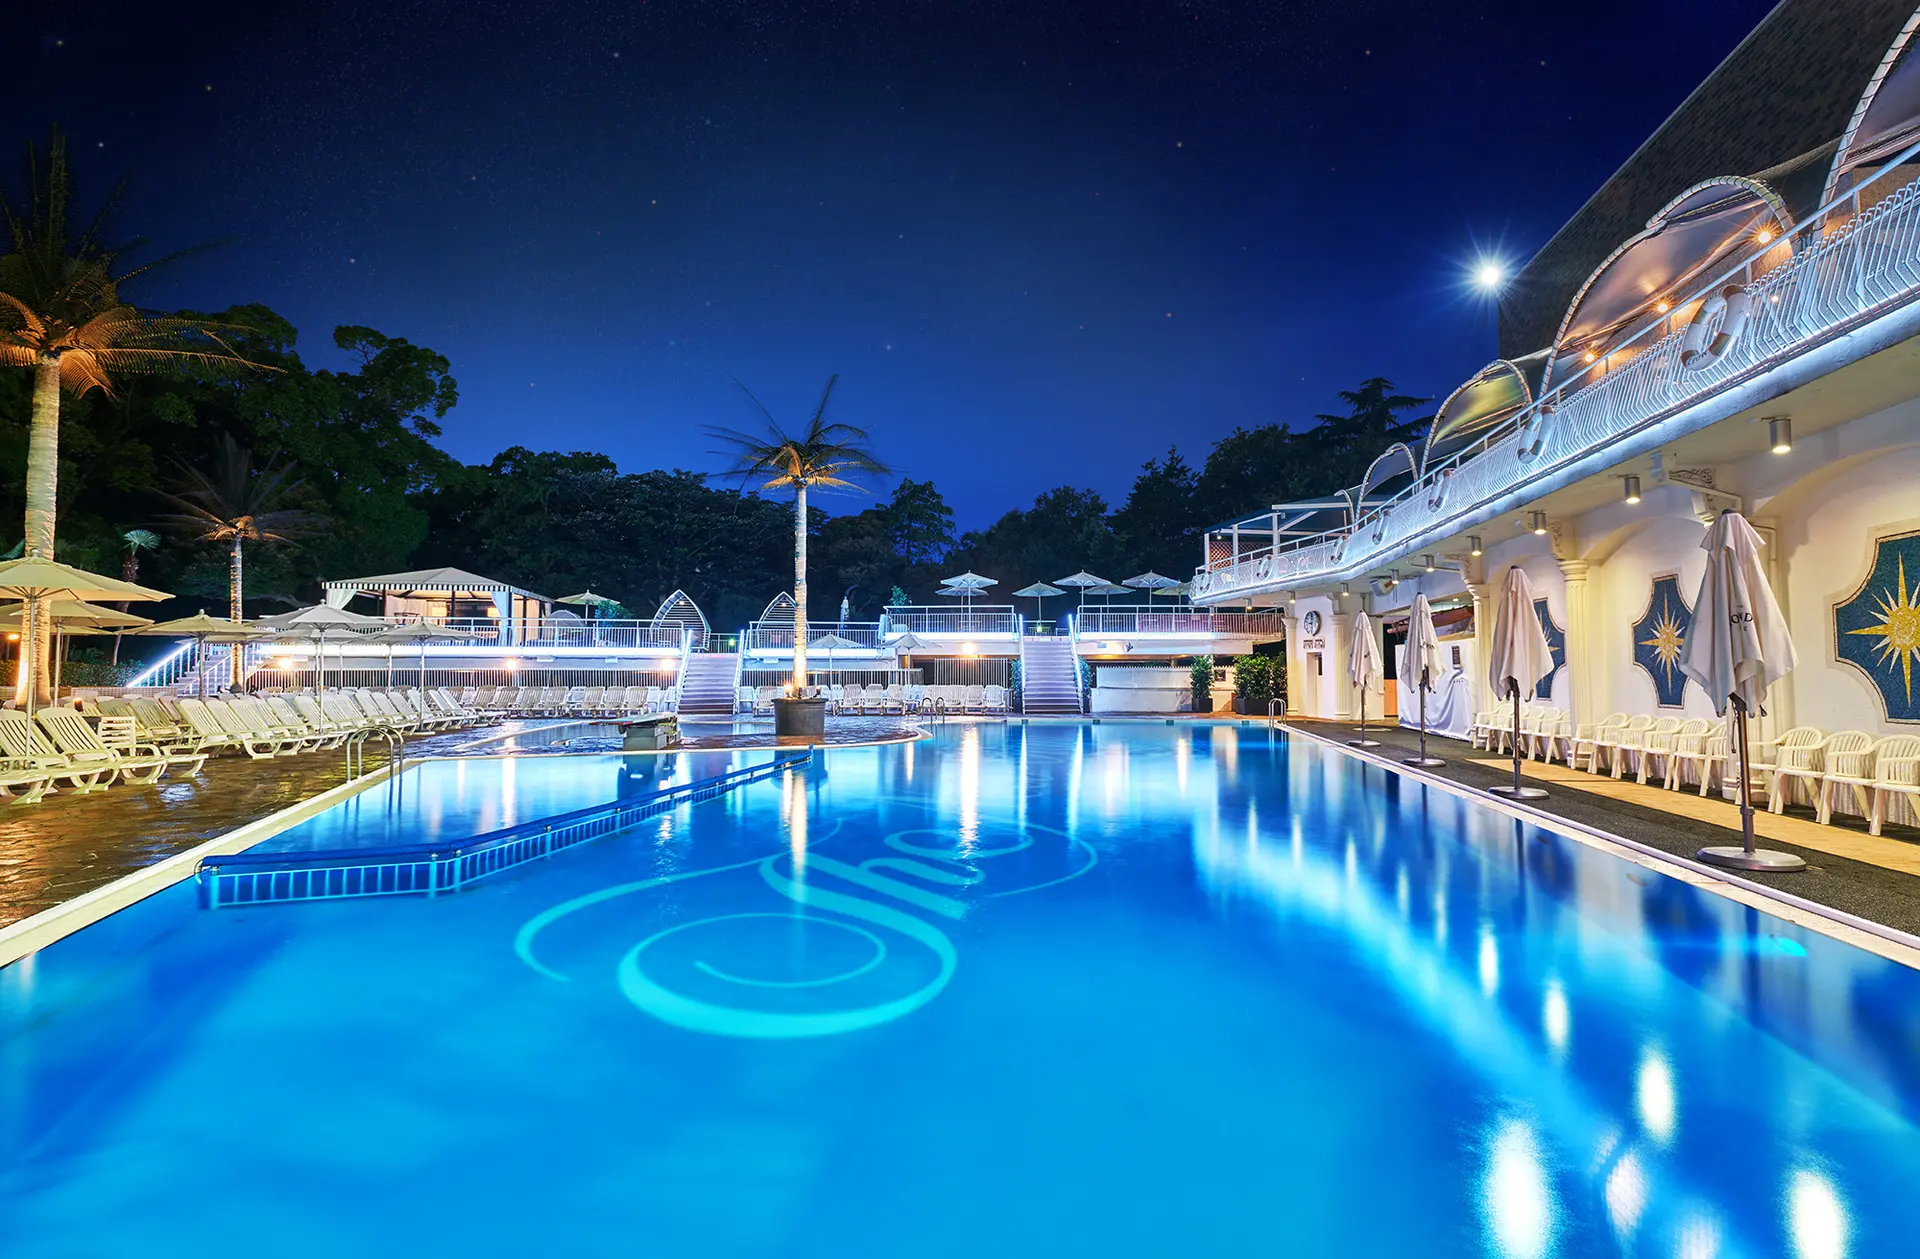 Hotel review Service & Facilities' - Hotel New Otani Executive House Zen - 3